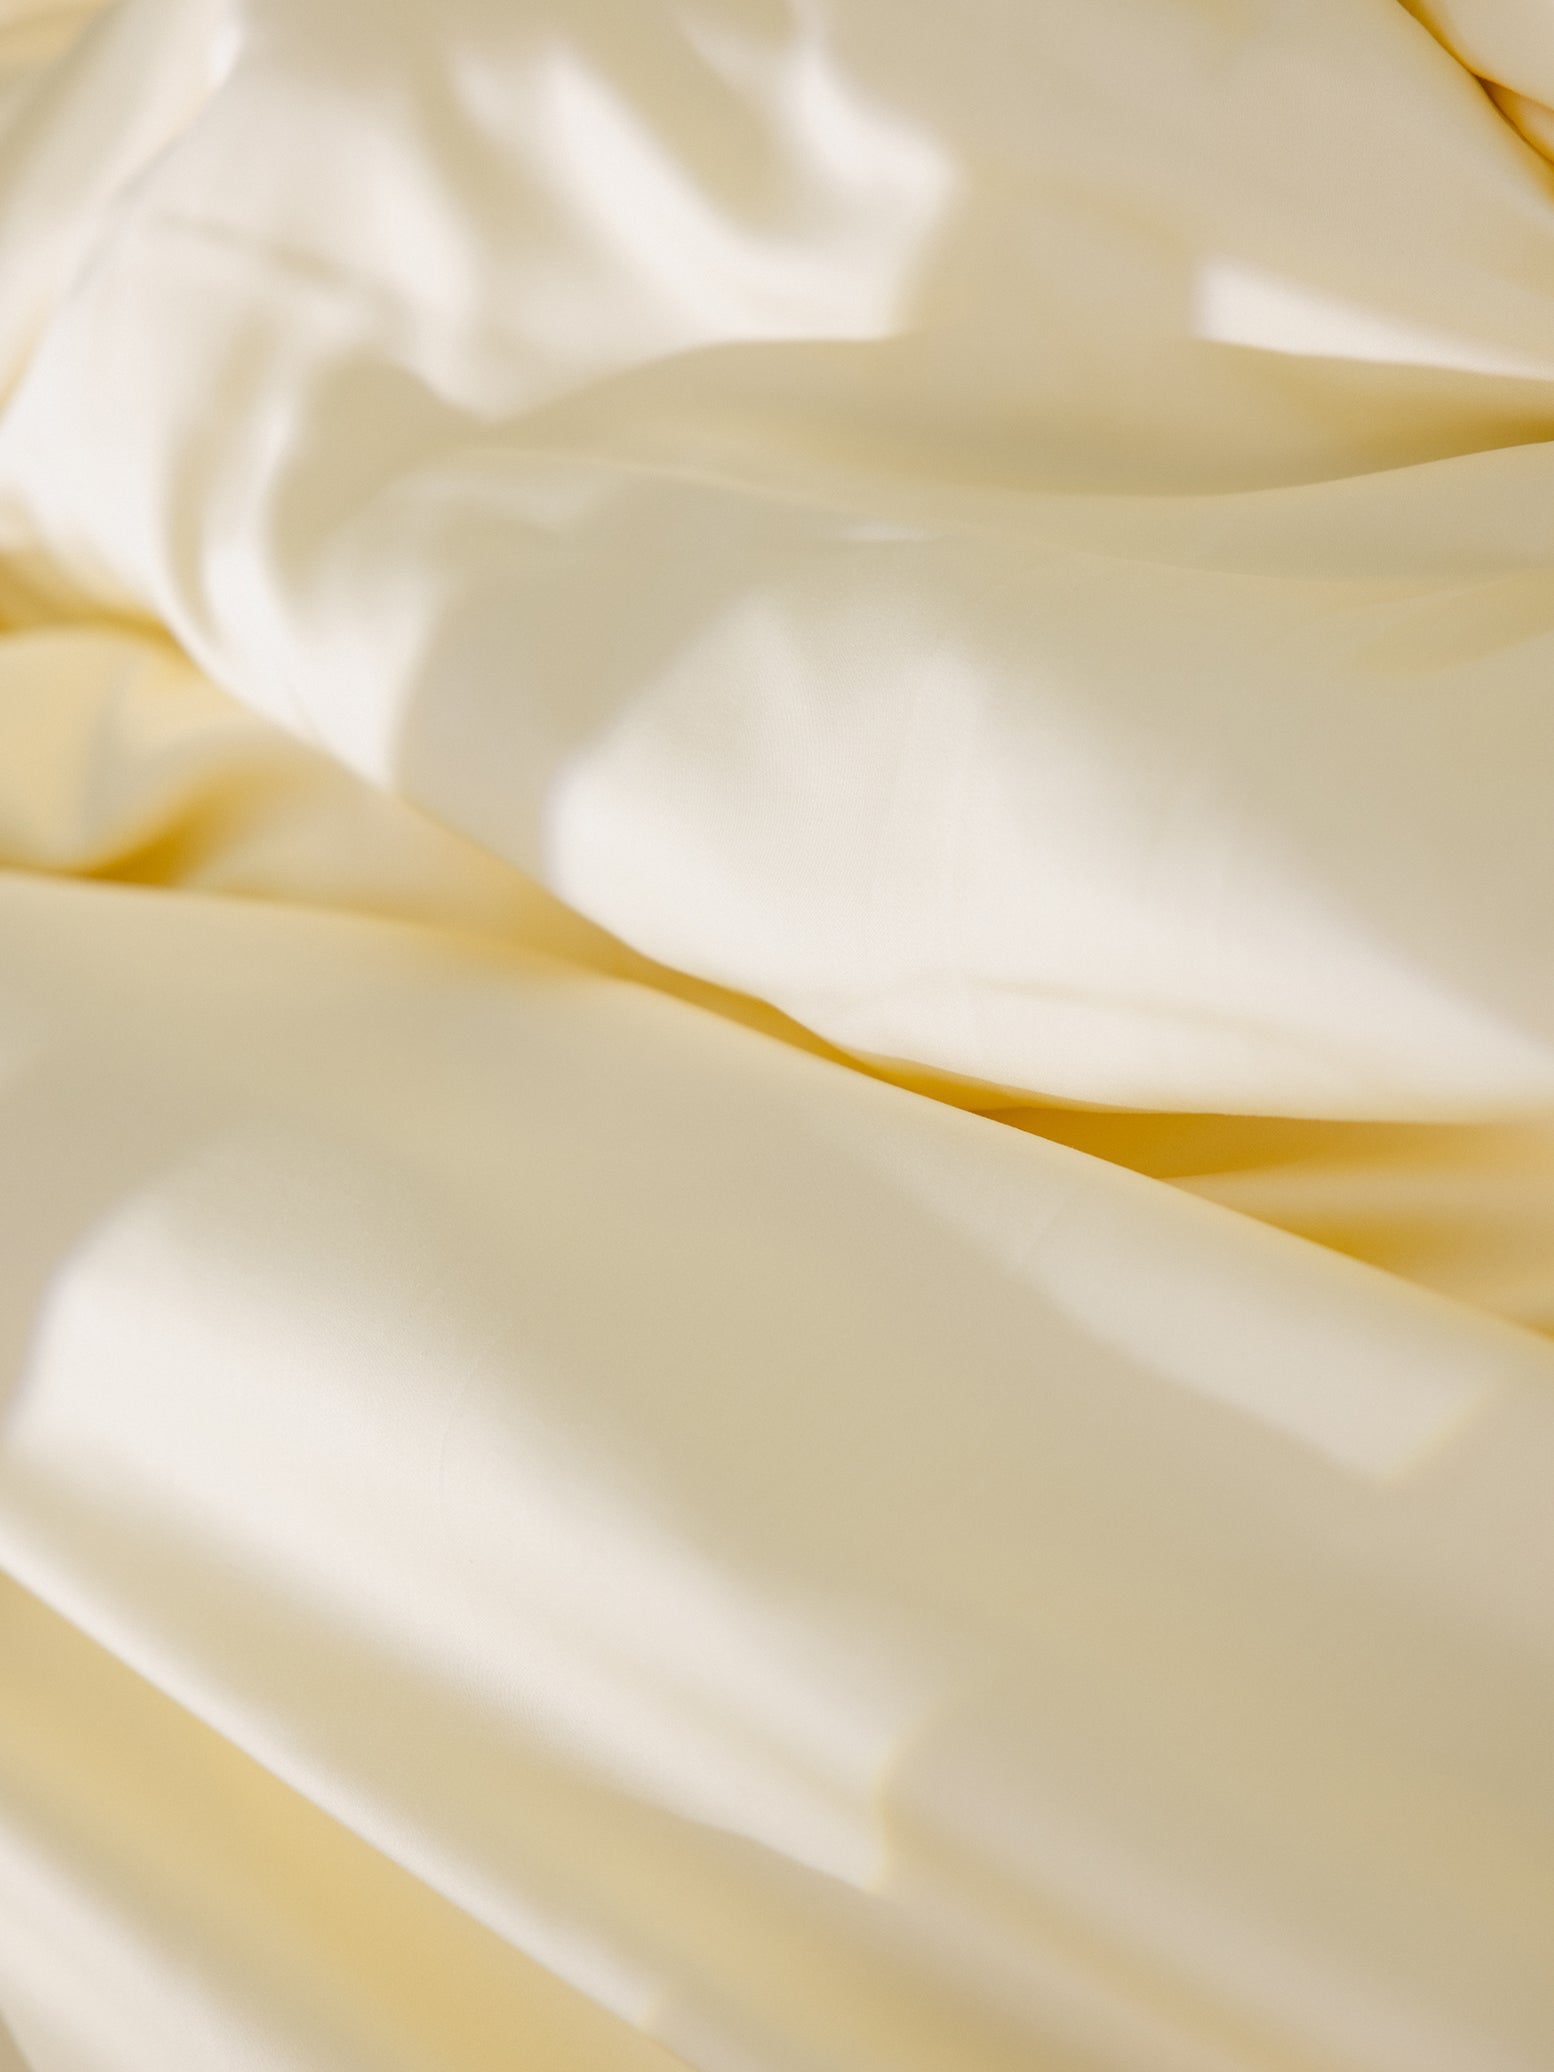 Lemonade Sheets on bed. Photo taken close up. 